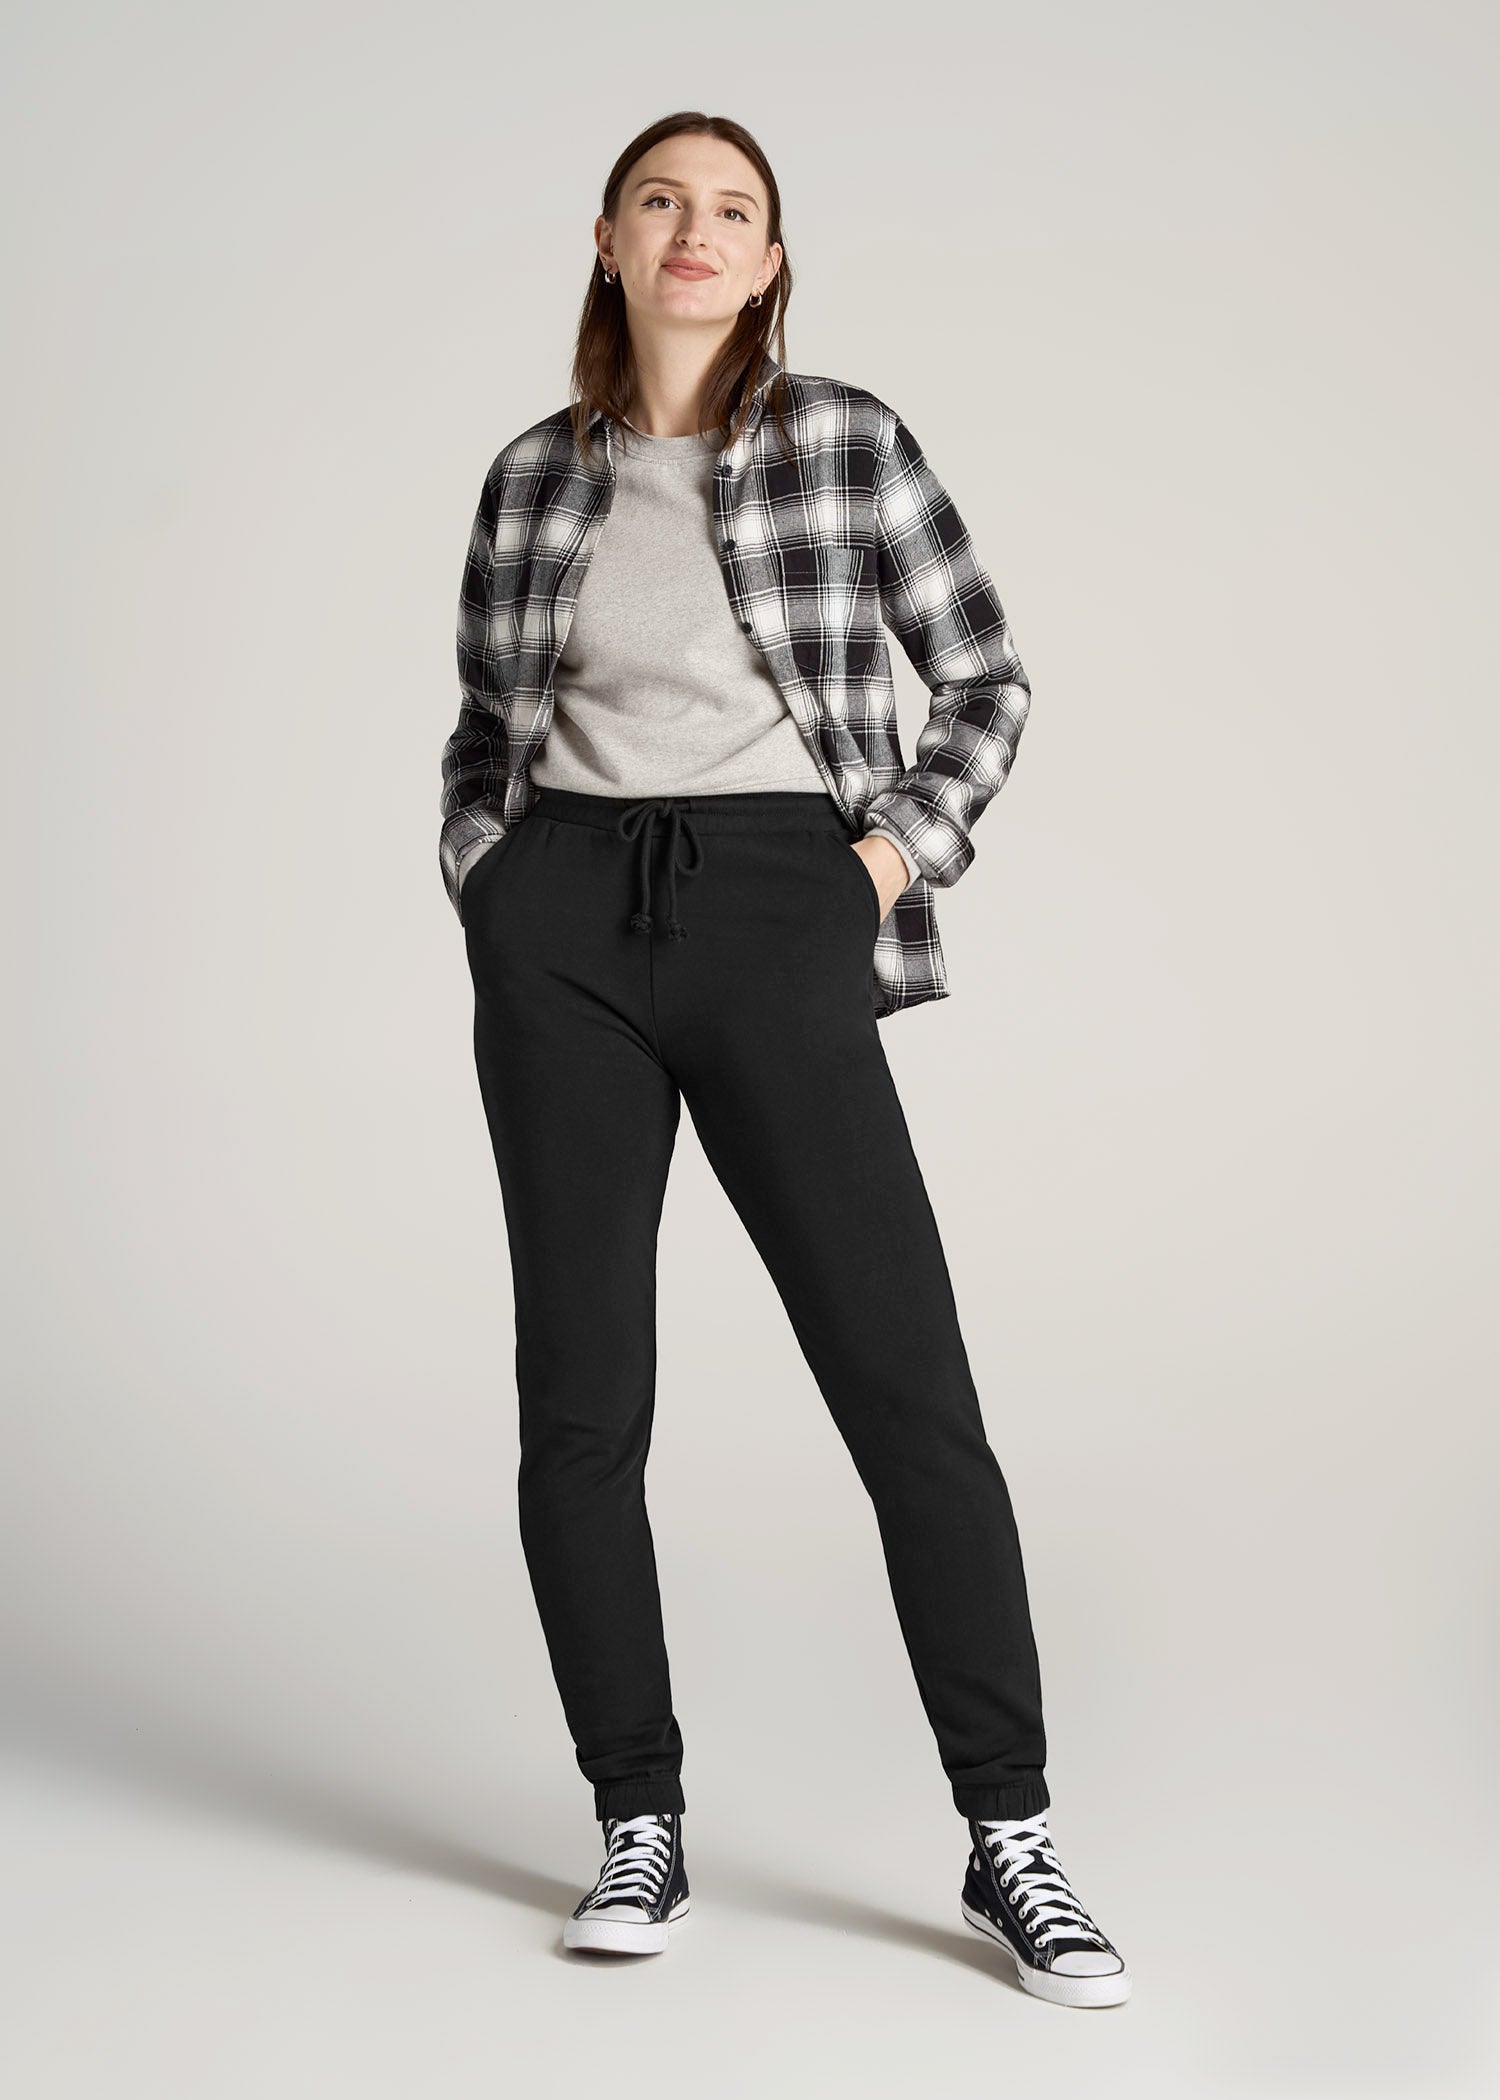 Slim Sweatpants Women's: High-Waisted Tall Women Black Sweatpants